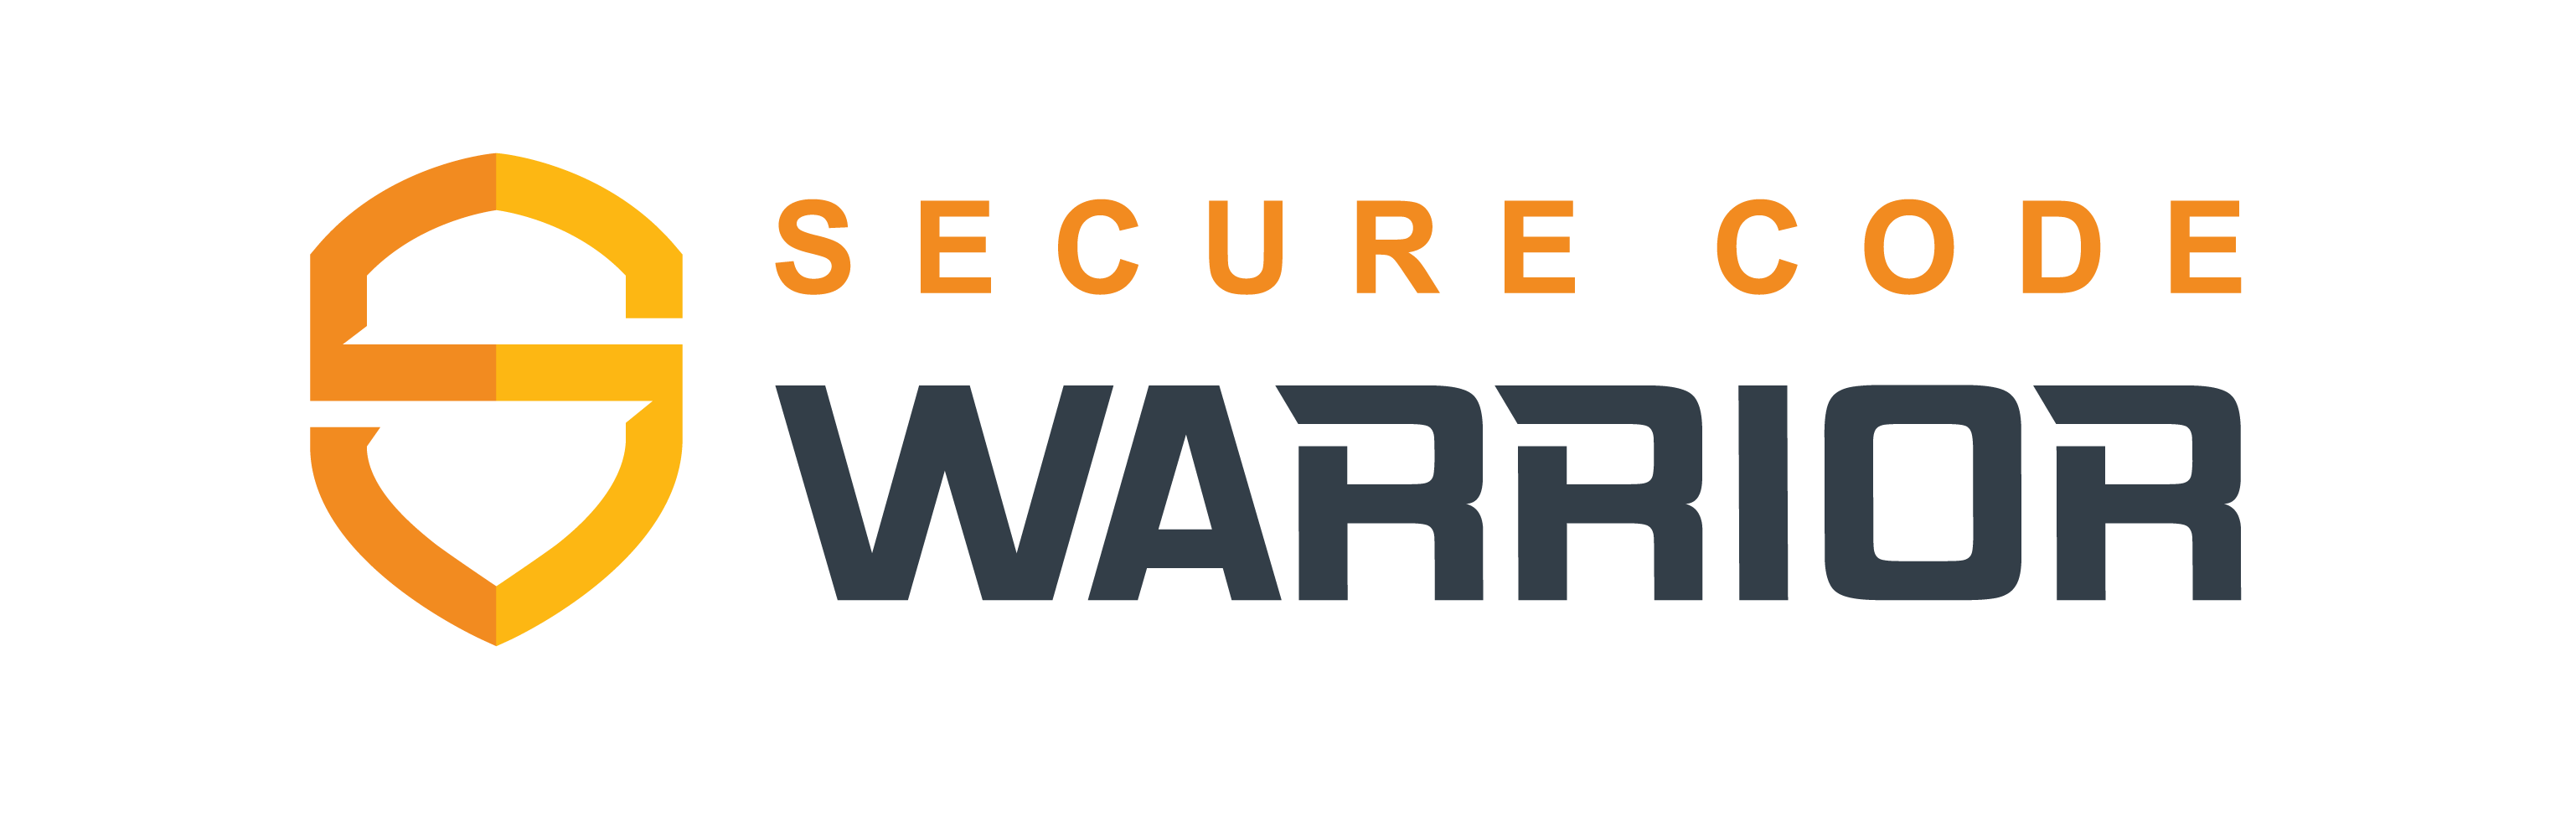 Secure Code Warrior